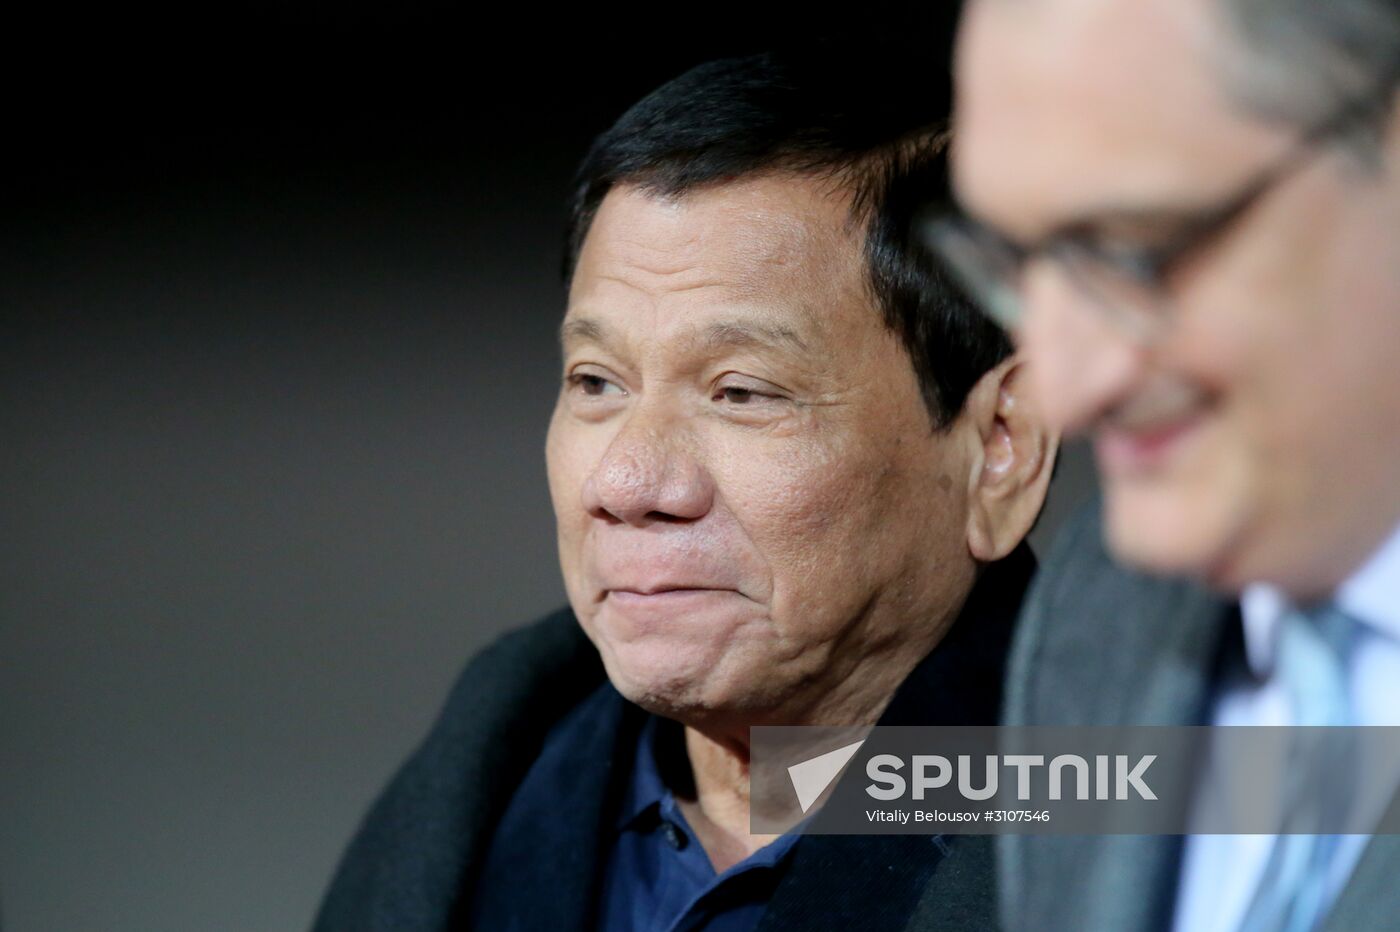 President of the Philippines Rodrigo Duterte arrives in Moscow